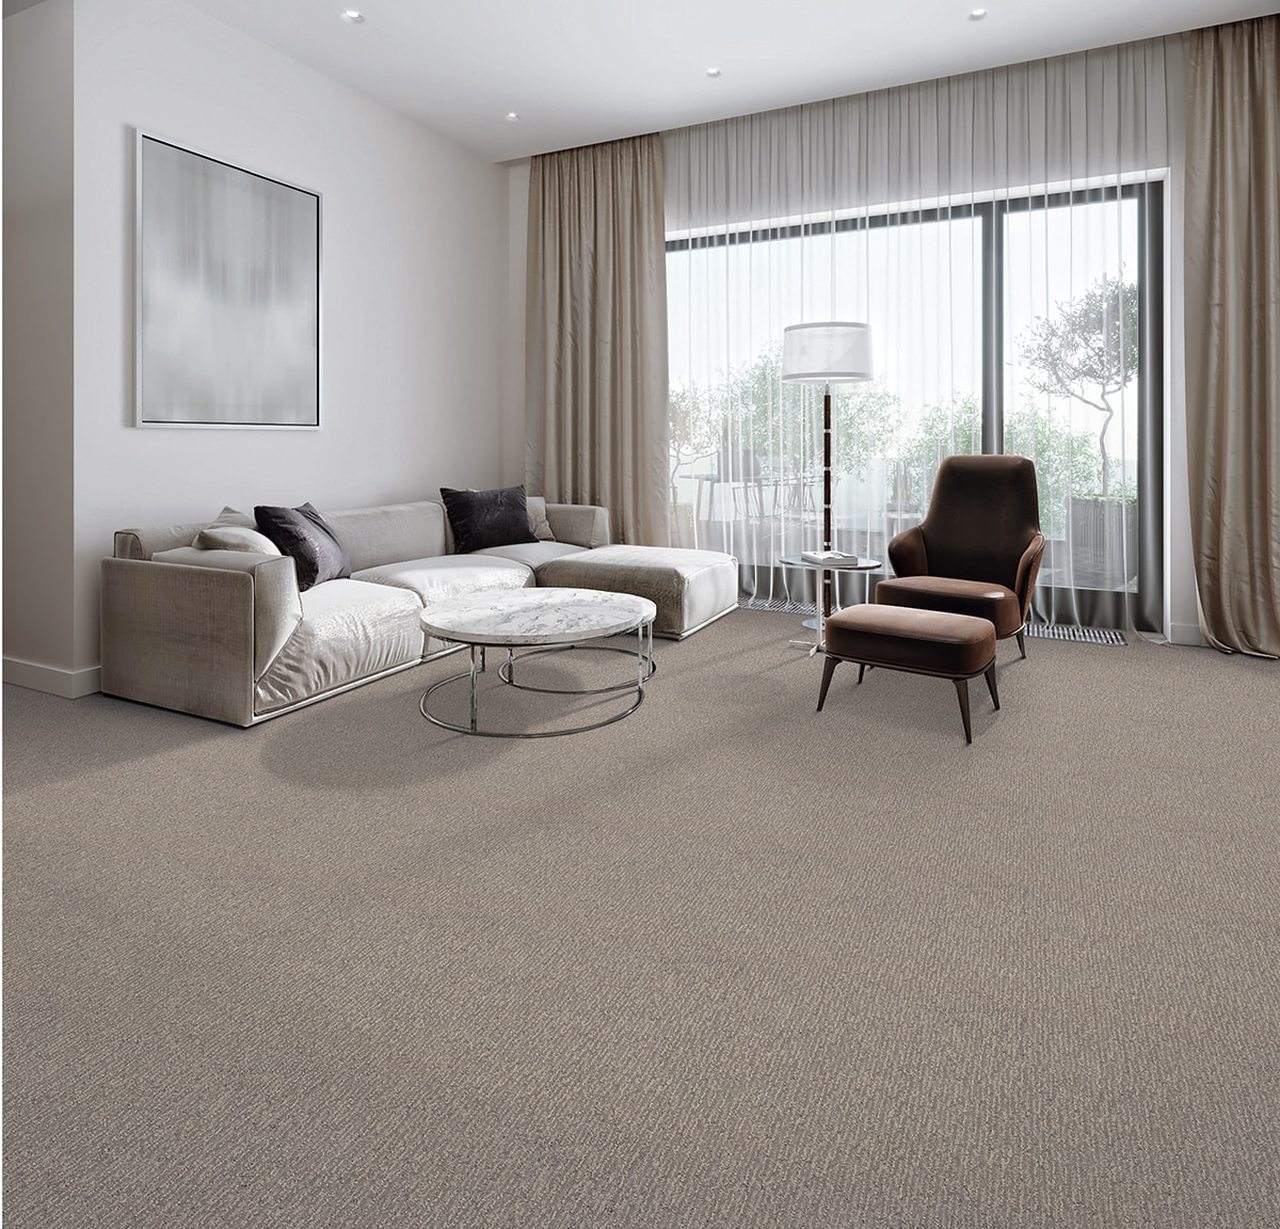 dream weaver carpet review image